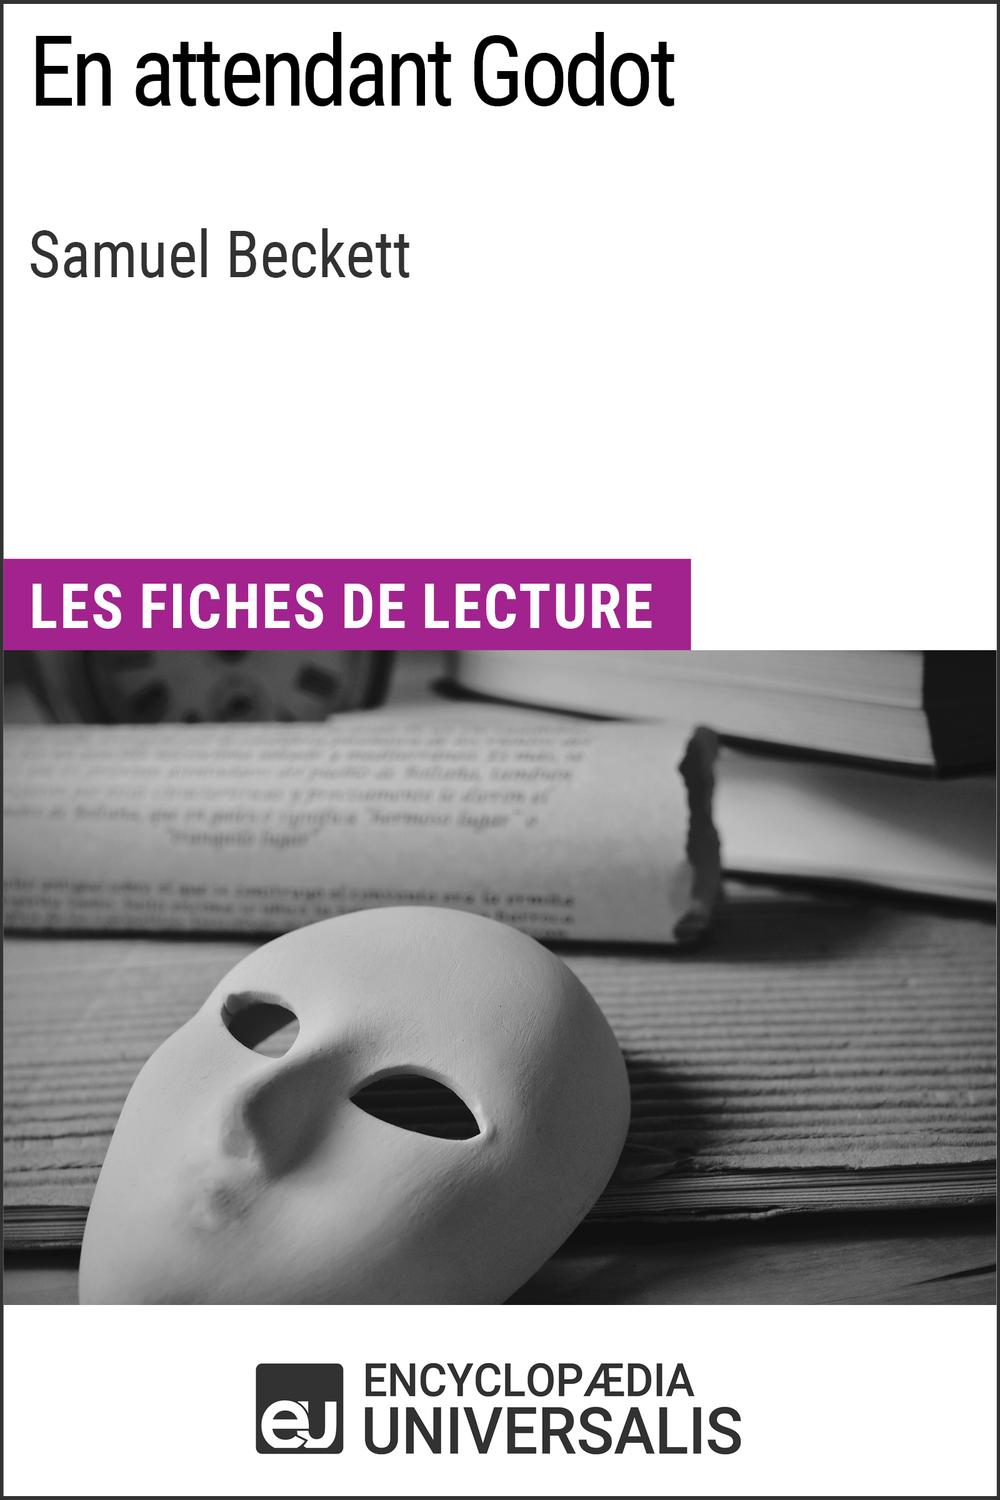 En attendant Godot de Samuel Beckett - Encyclopaedia Universalis